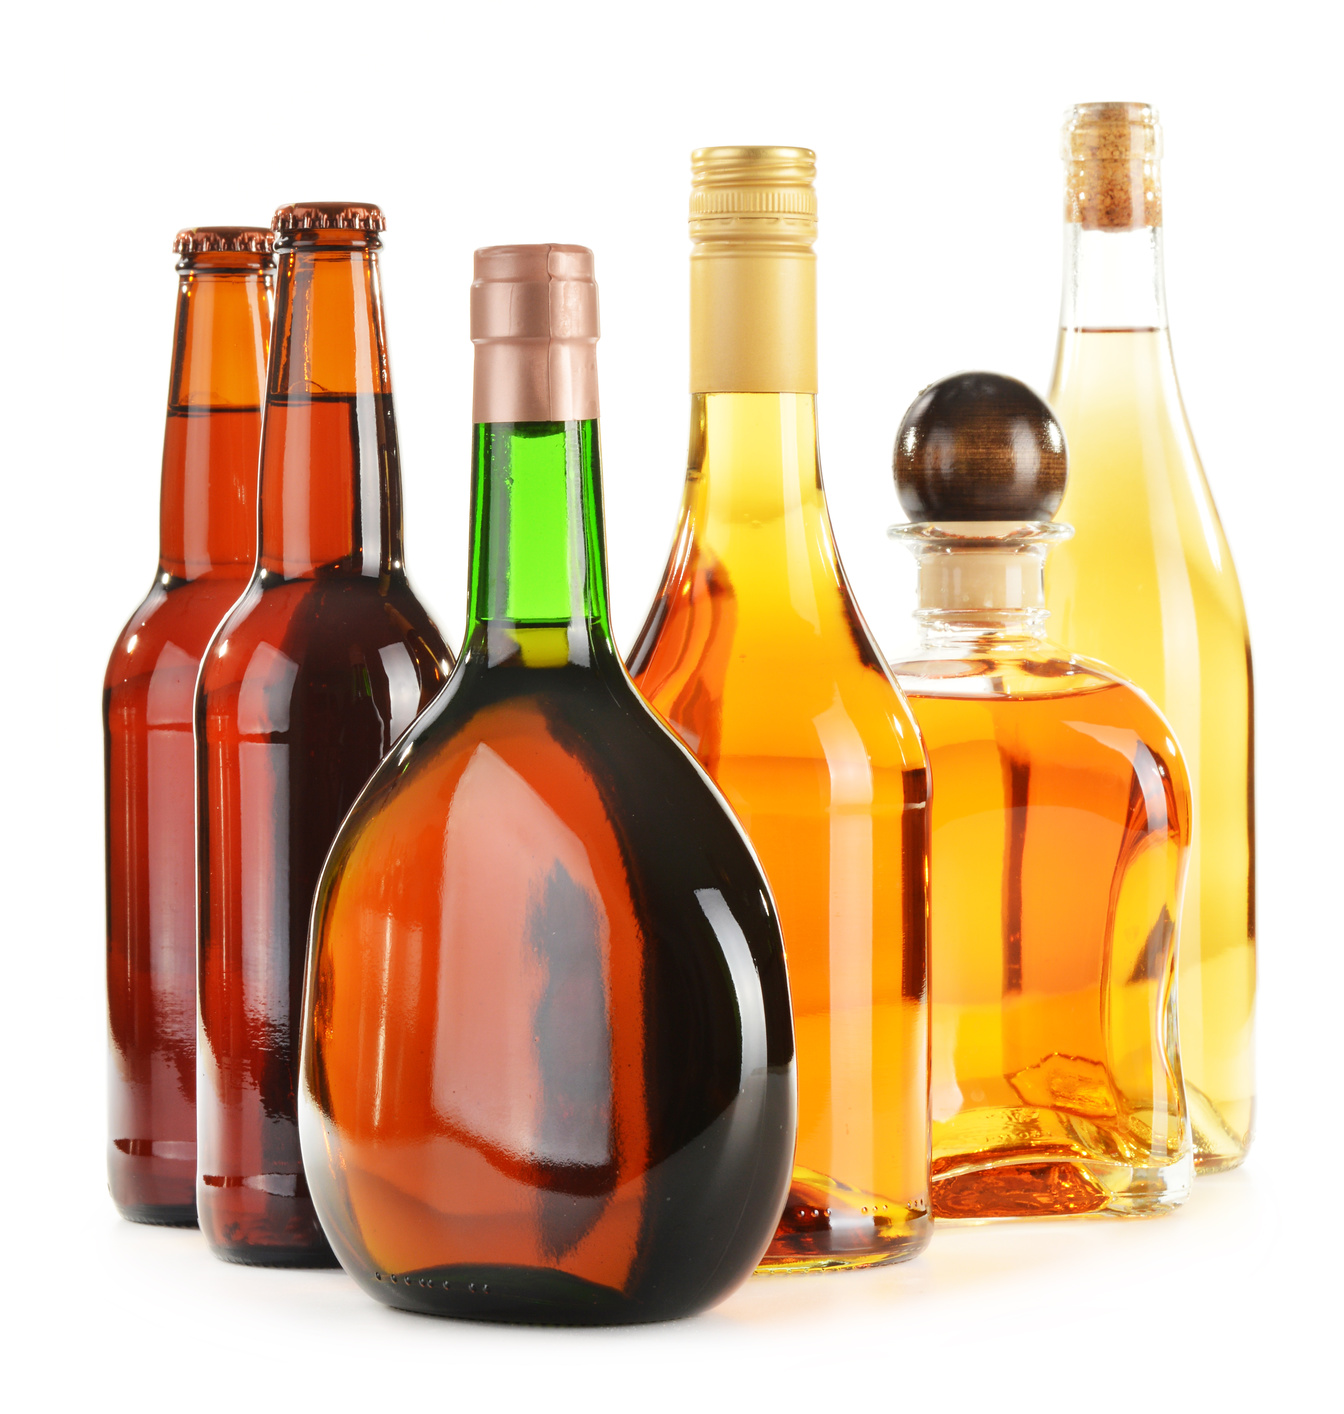 Men sought over high-value booze theft